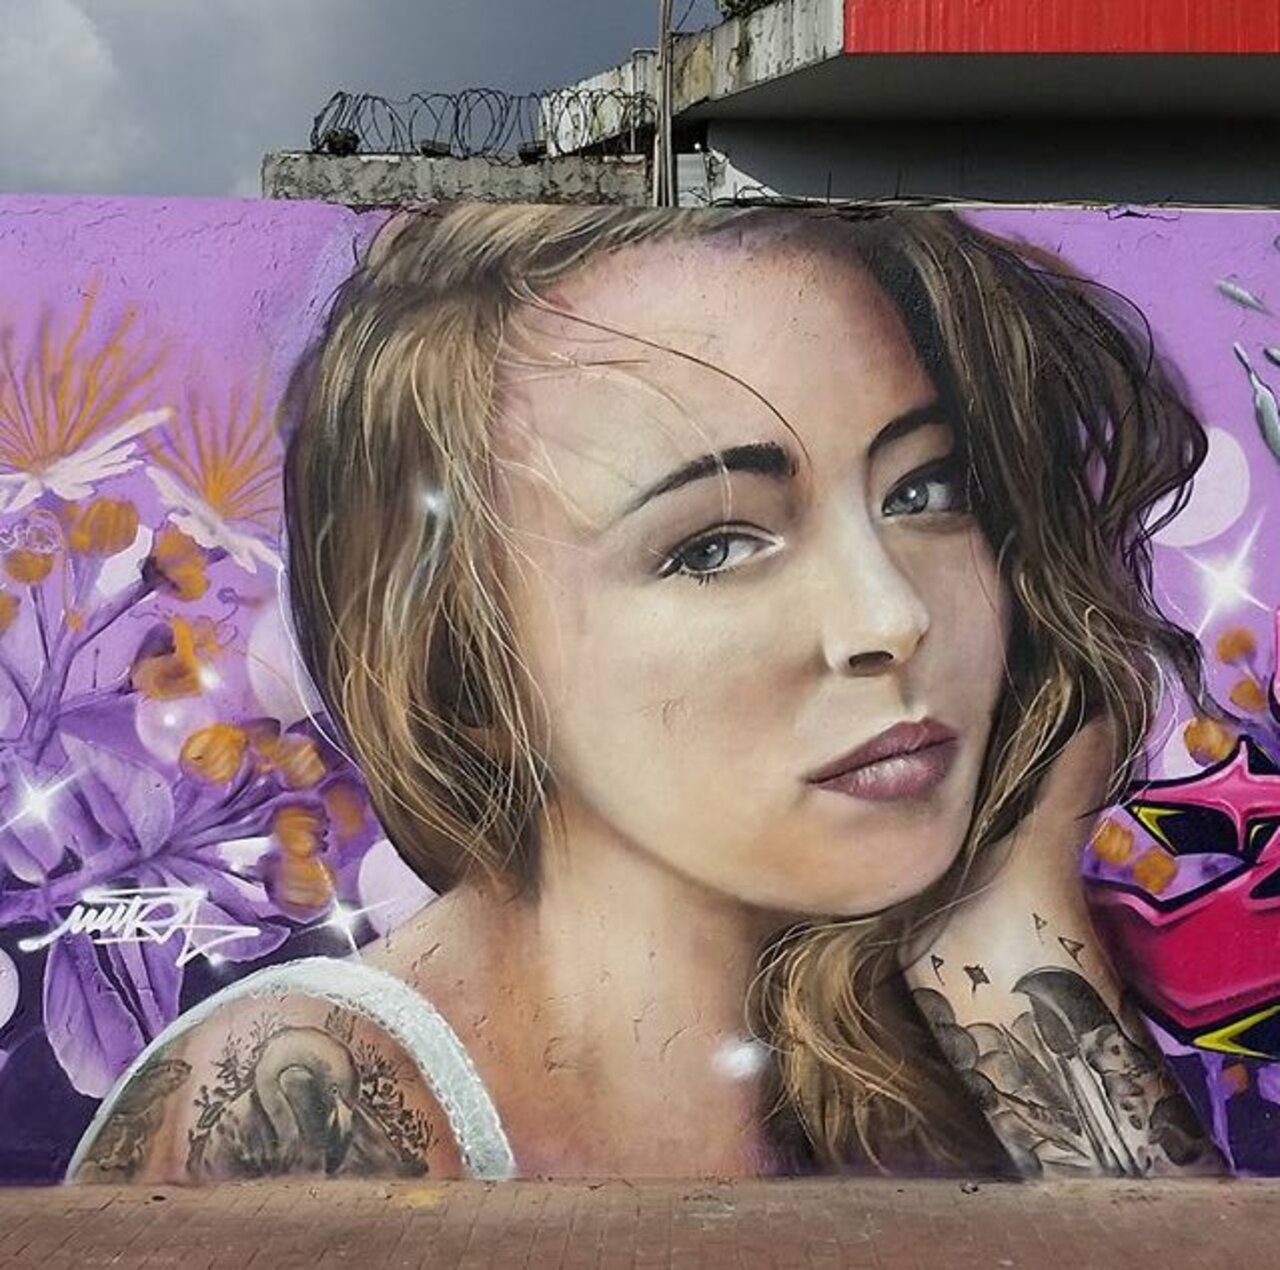 JewelNiles1: New Street Art by Mantarea 

#art #graffiti #mural #streetart https://t.co/8uZy20bAES